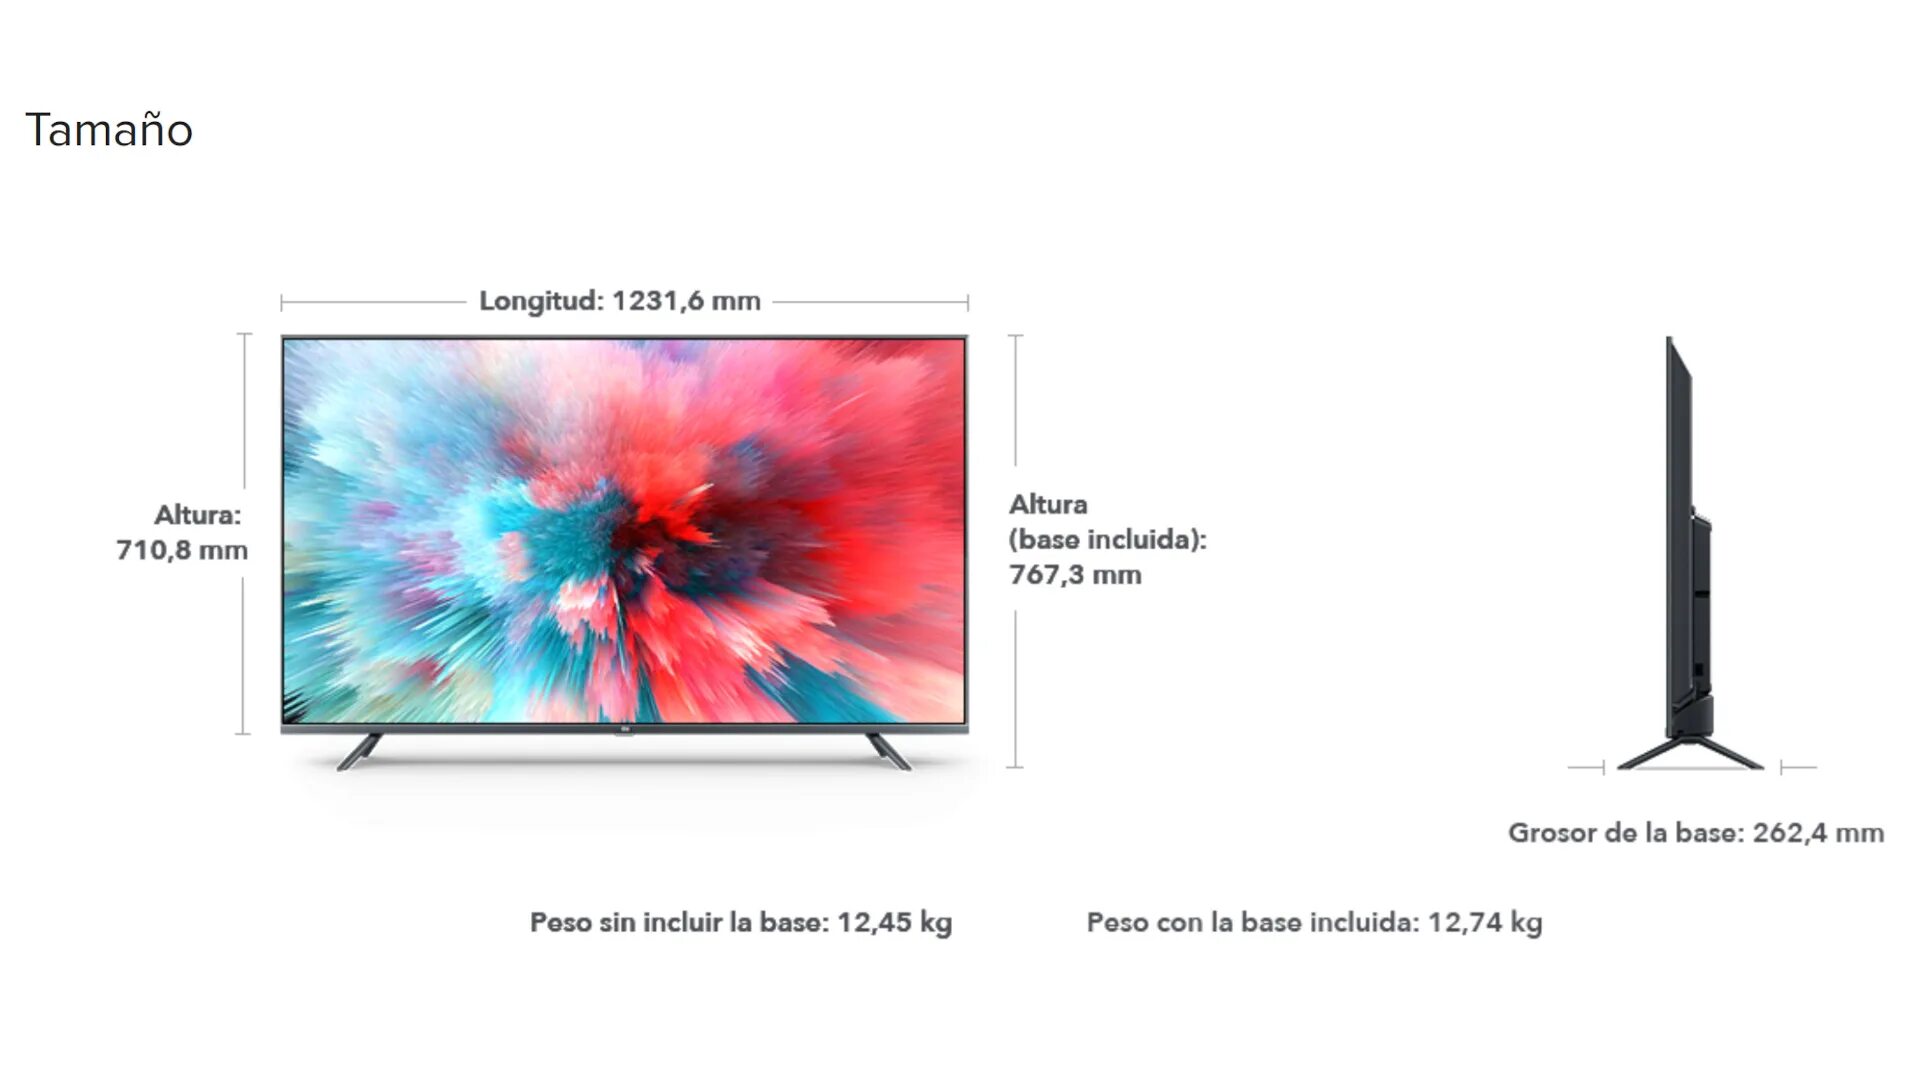 Телевизор 55 вес. Телевизор самсунг 55 дюймов габариты в см. Размер телевизора самсунг 50 дюймов. Xiaomi mi TV 4s 55 Размеры. Телевизор самсунг 55 Размеры.